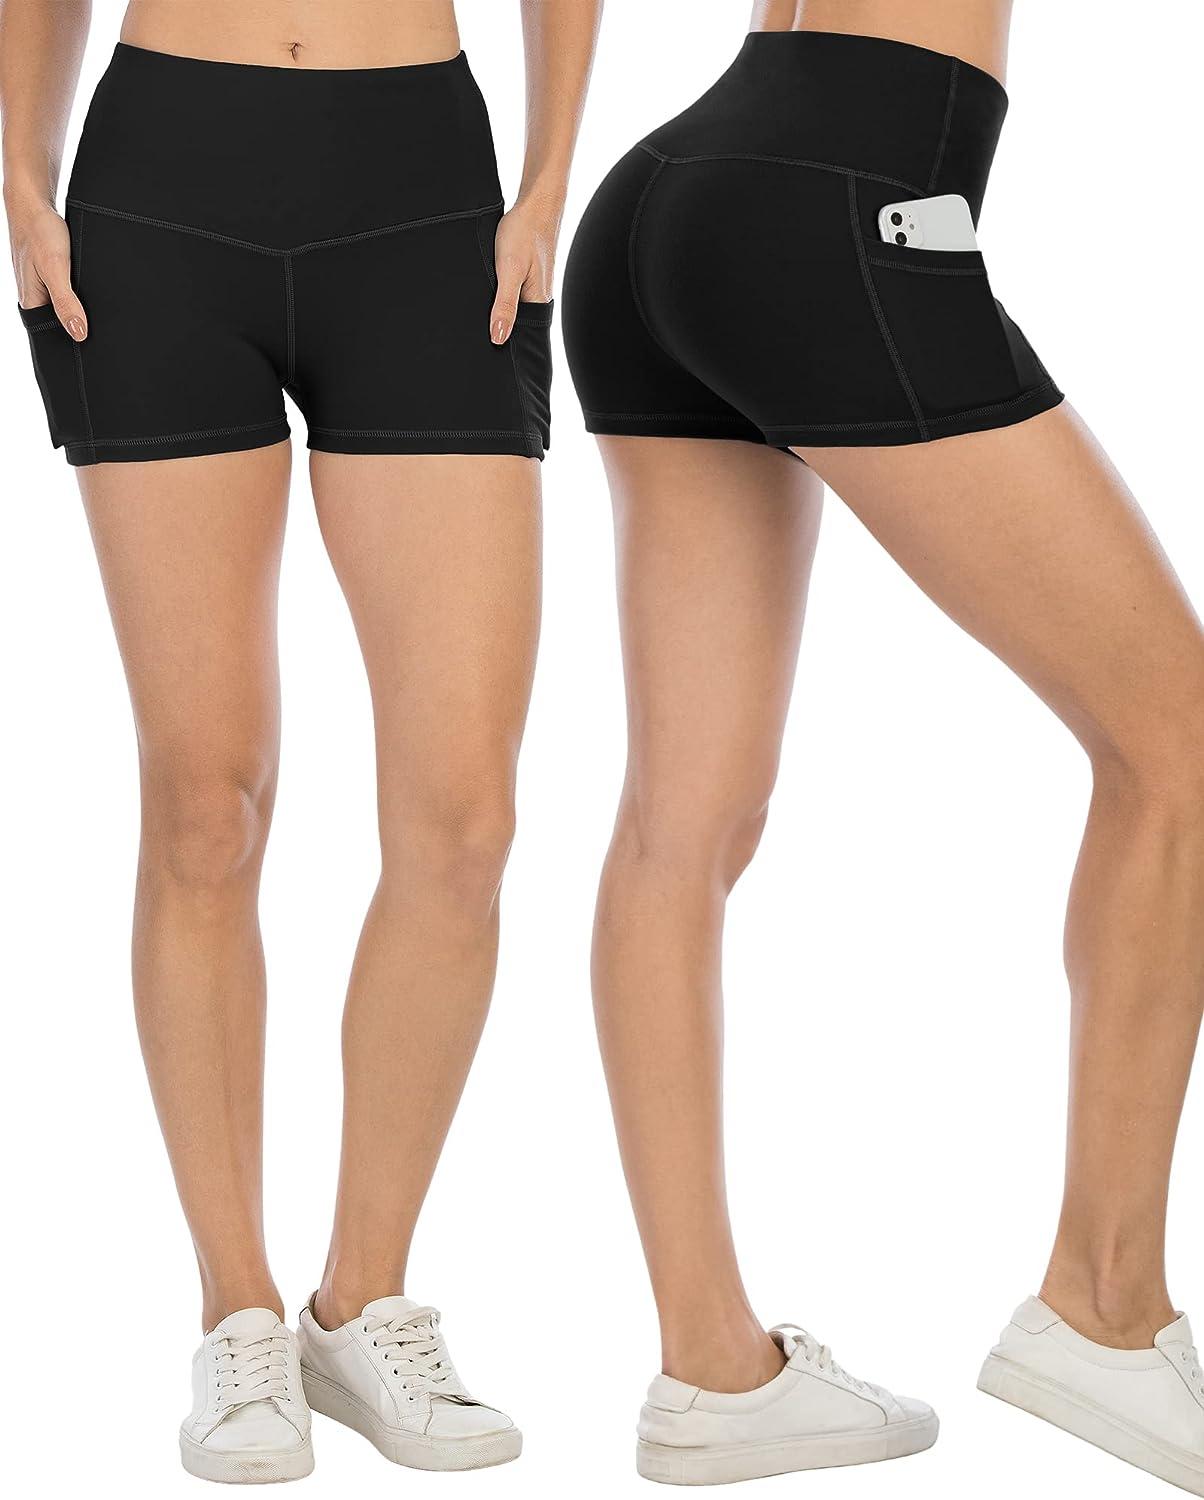 CHRLEISURE Workout Booty Spandex Shorts for Women, High Waist Soft